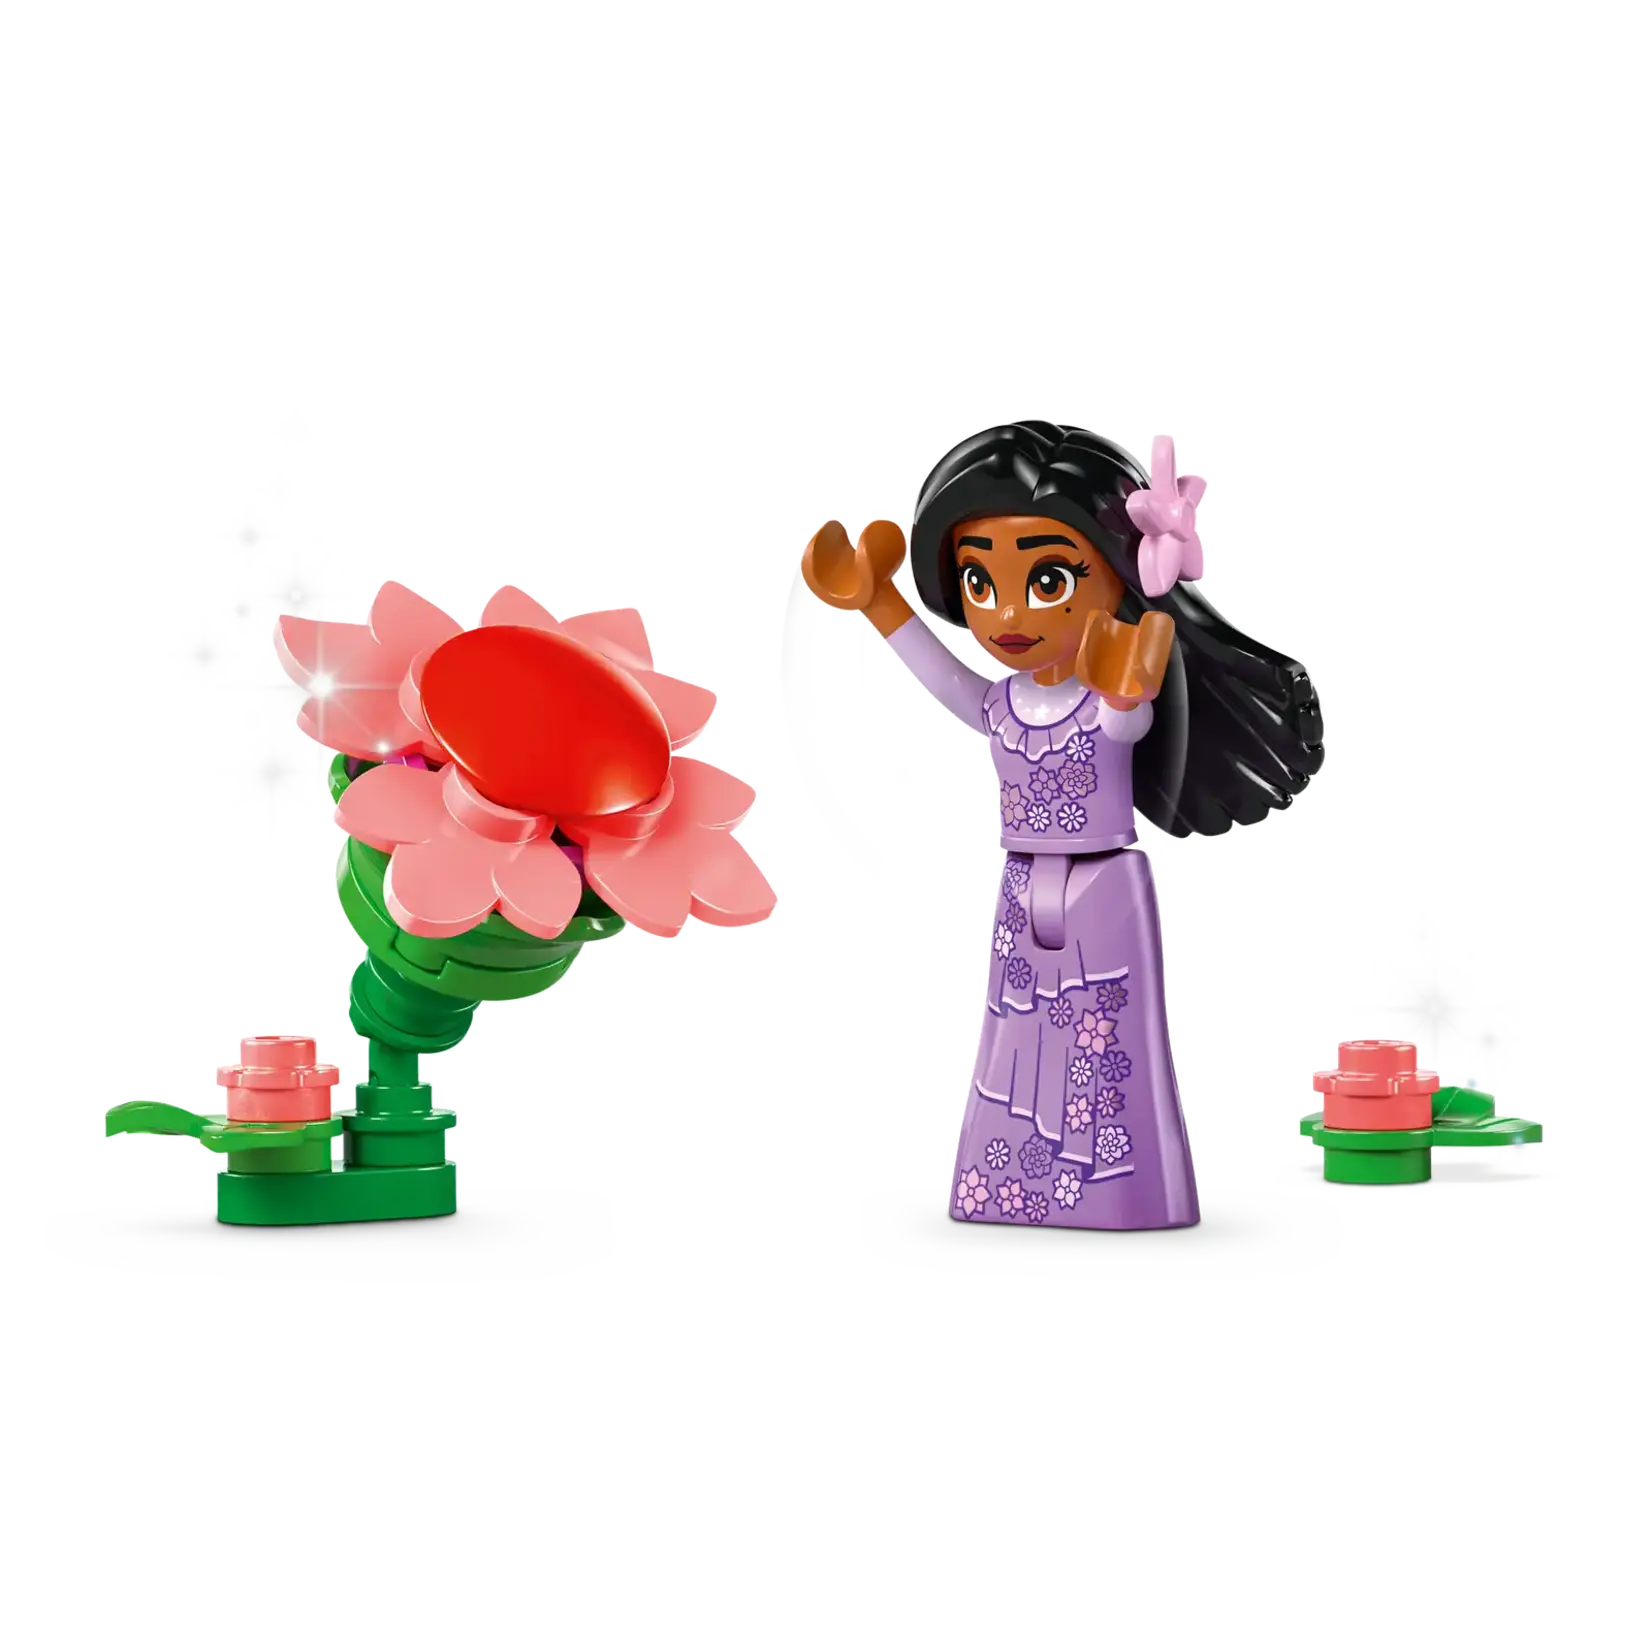 LEGO LEGO Disney Encanto Isabela's Bloempot (43237)